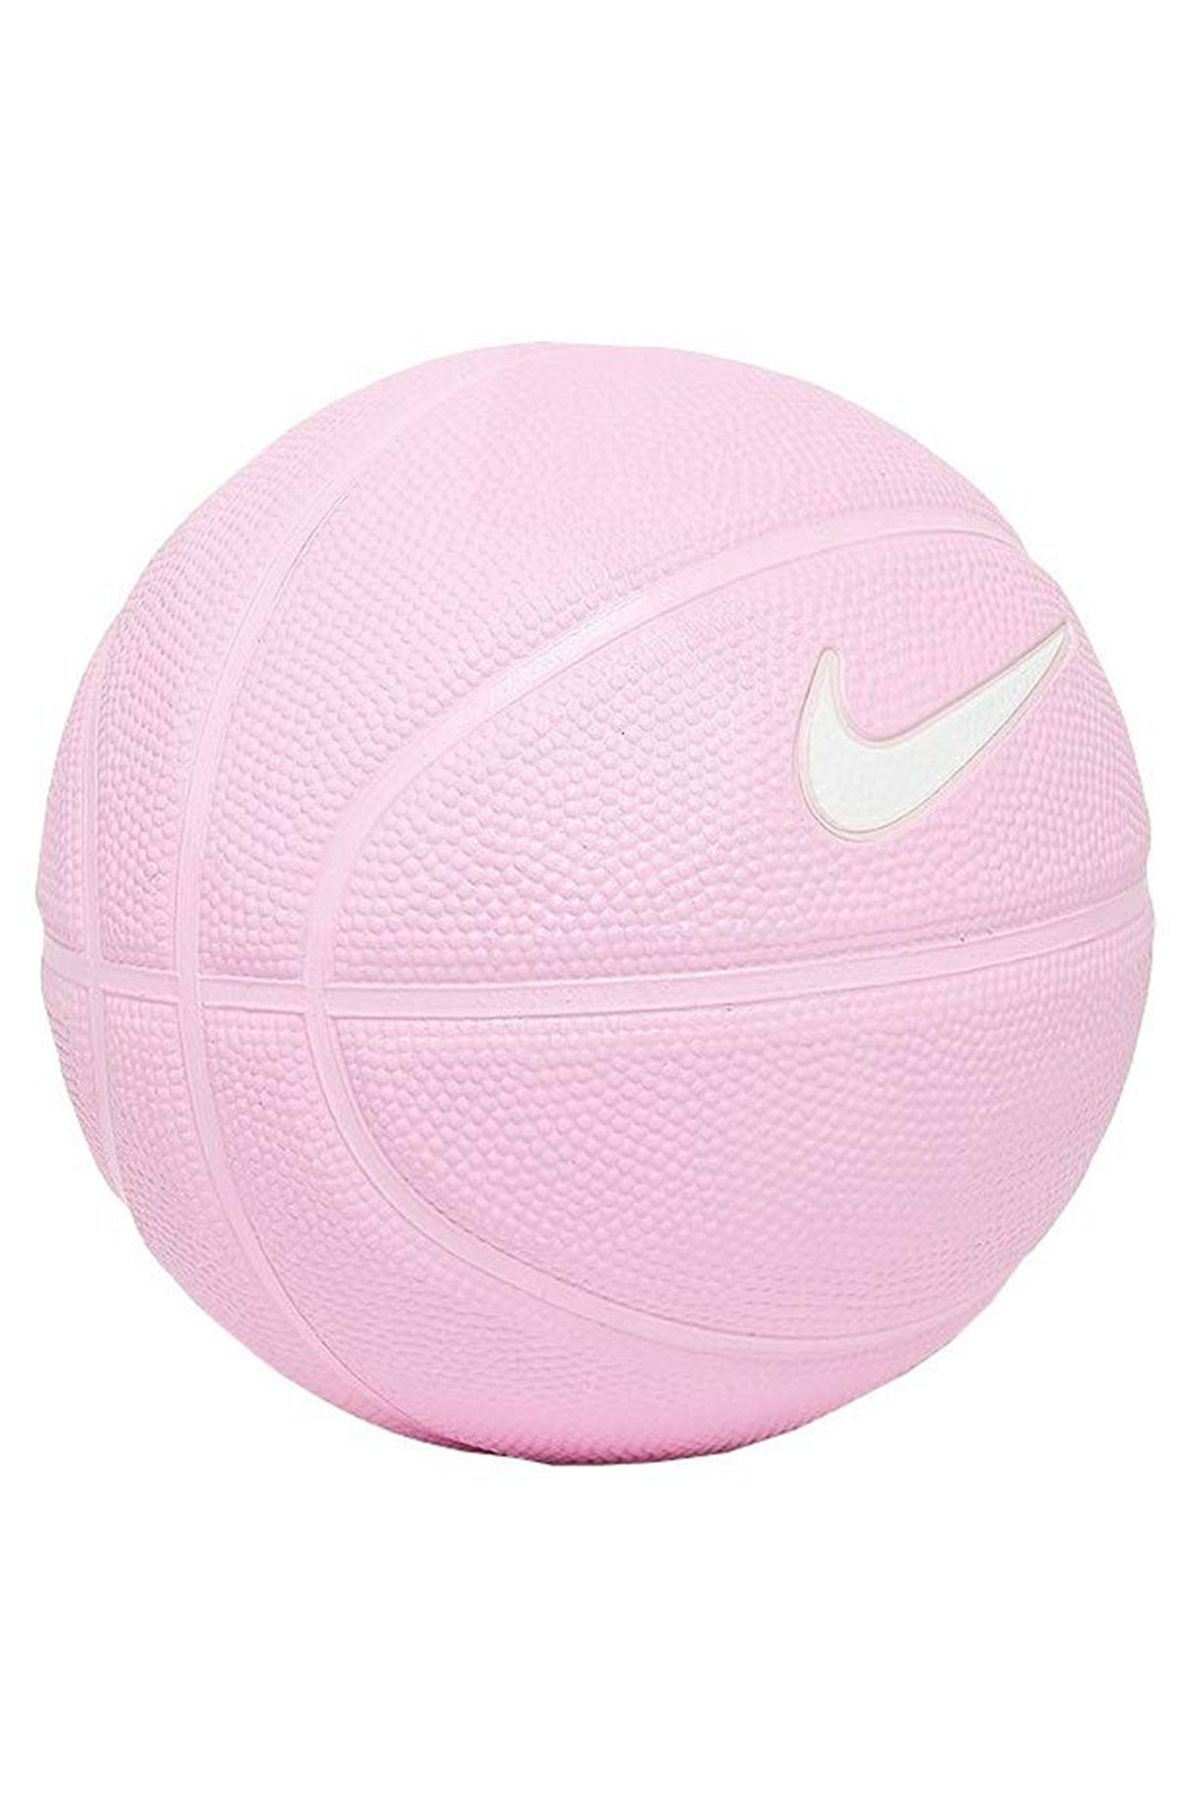 Nike Skills Pink Rise Unisex Pembe Basketbol Topu N.000.1285.655.03